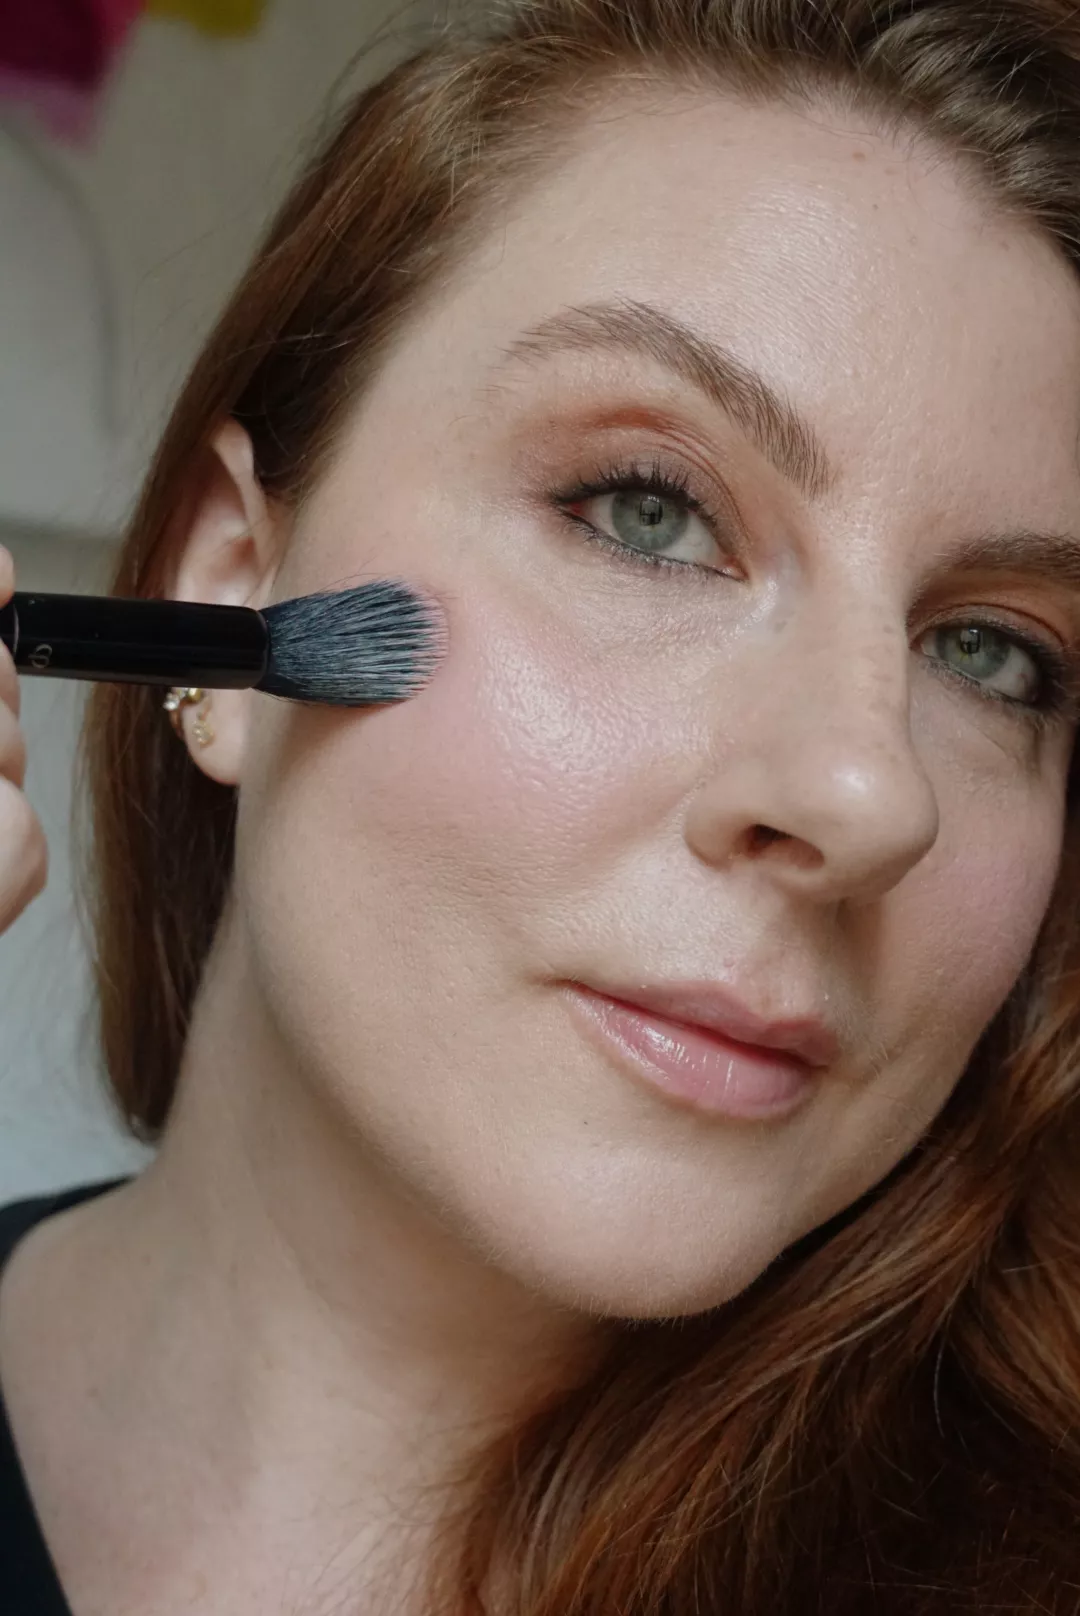 Makeup artist and Byrdie writer Ashley Rebecca applies pink cream blush to cheeks